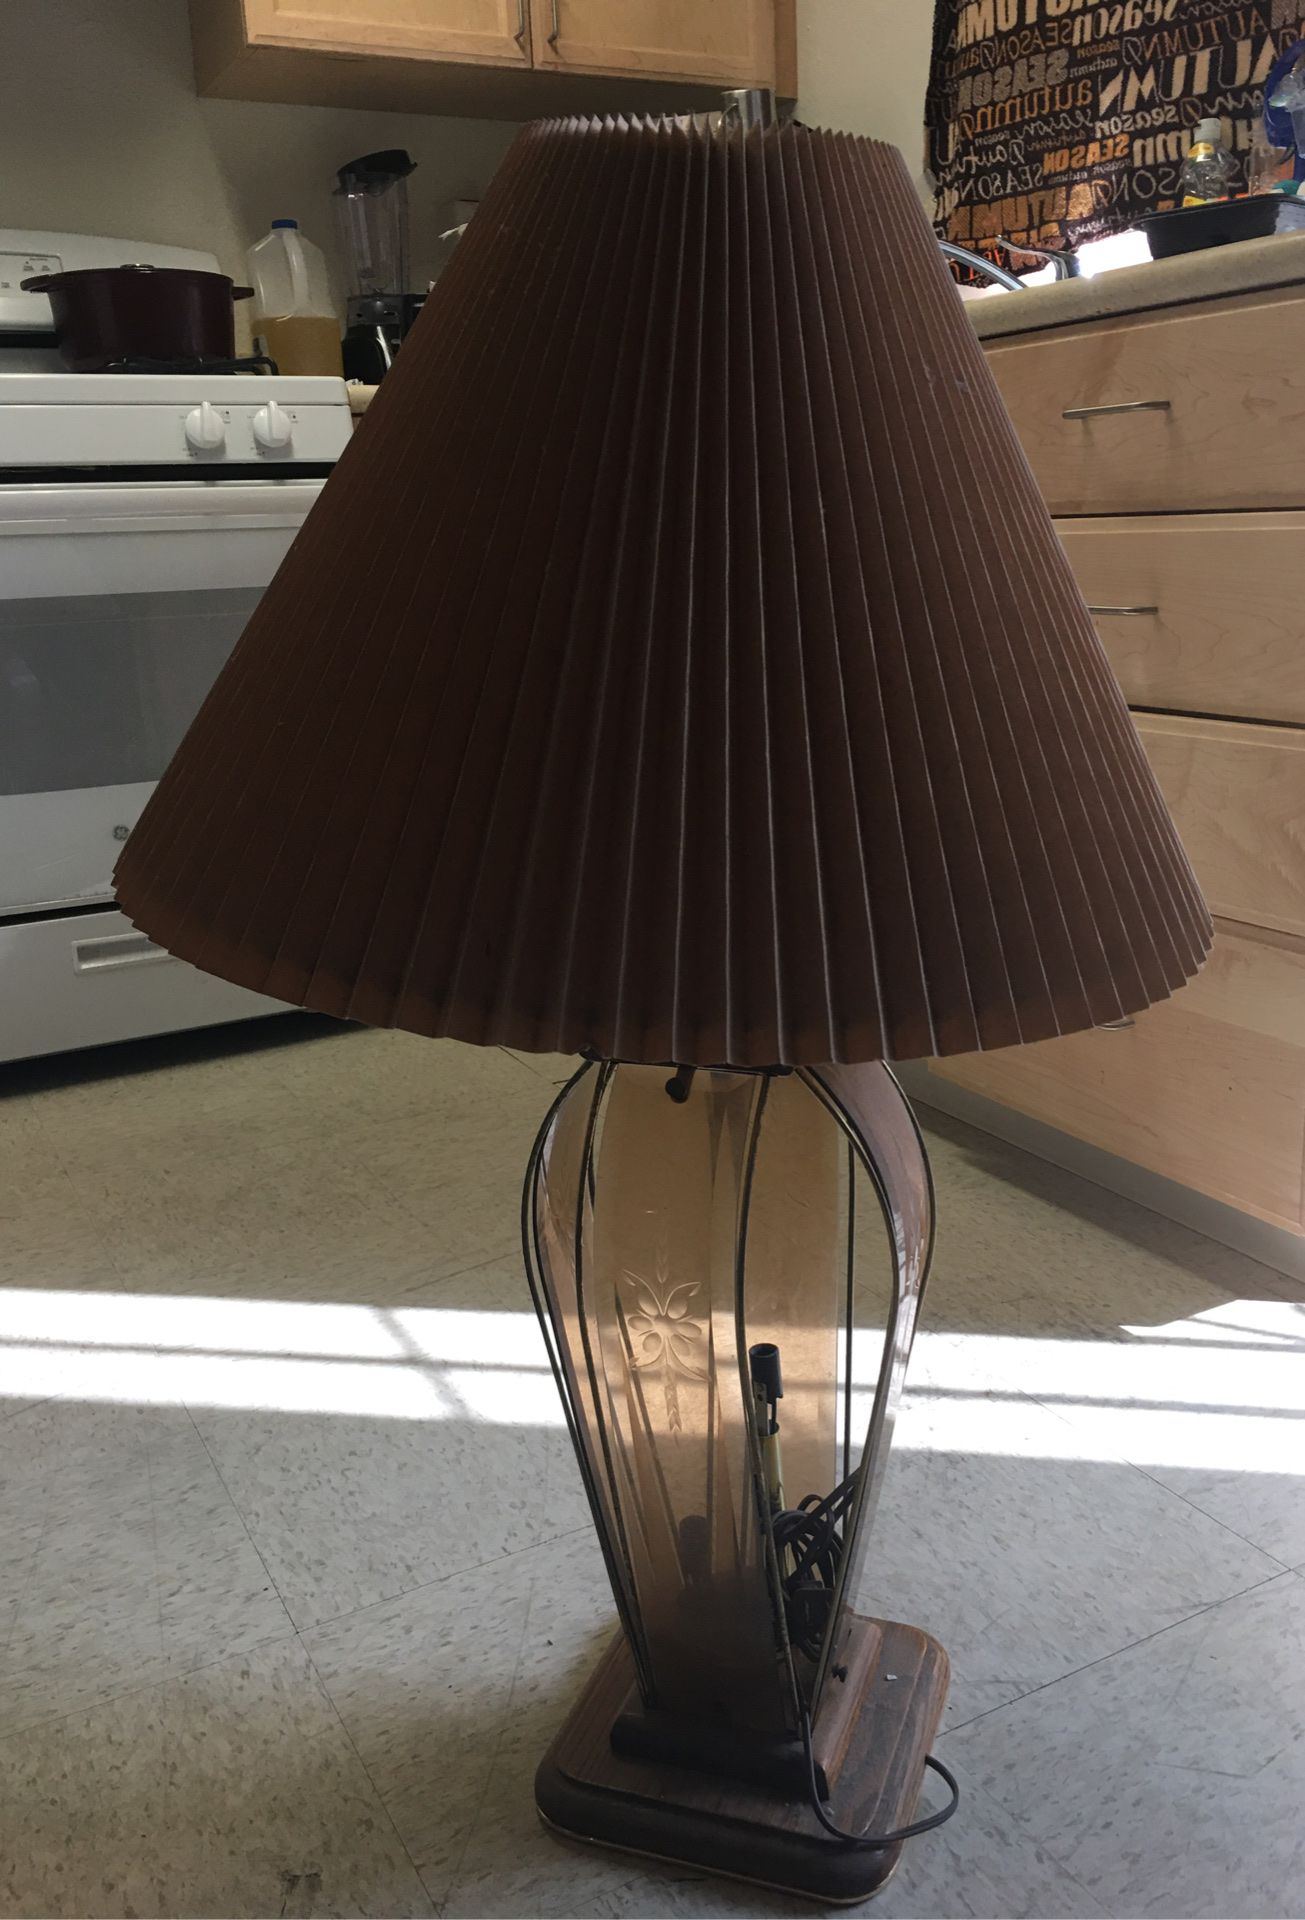 Nice antique lamp works good